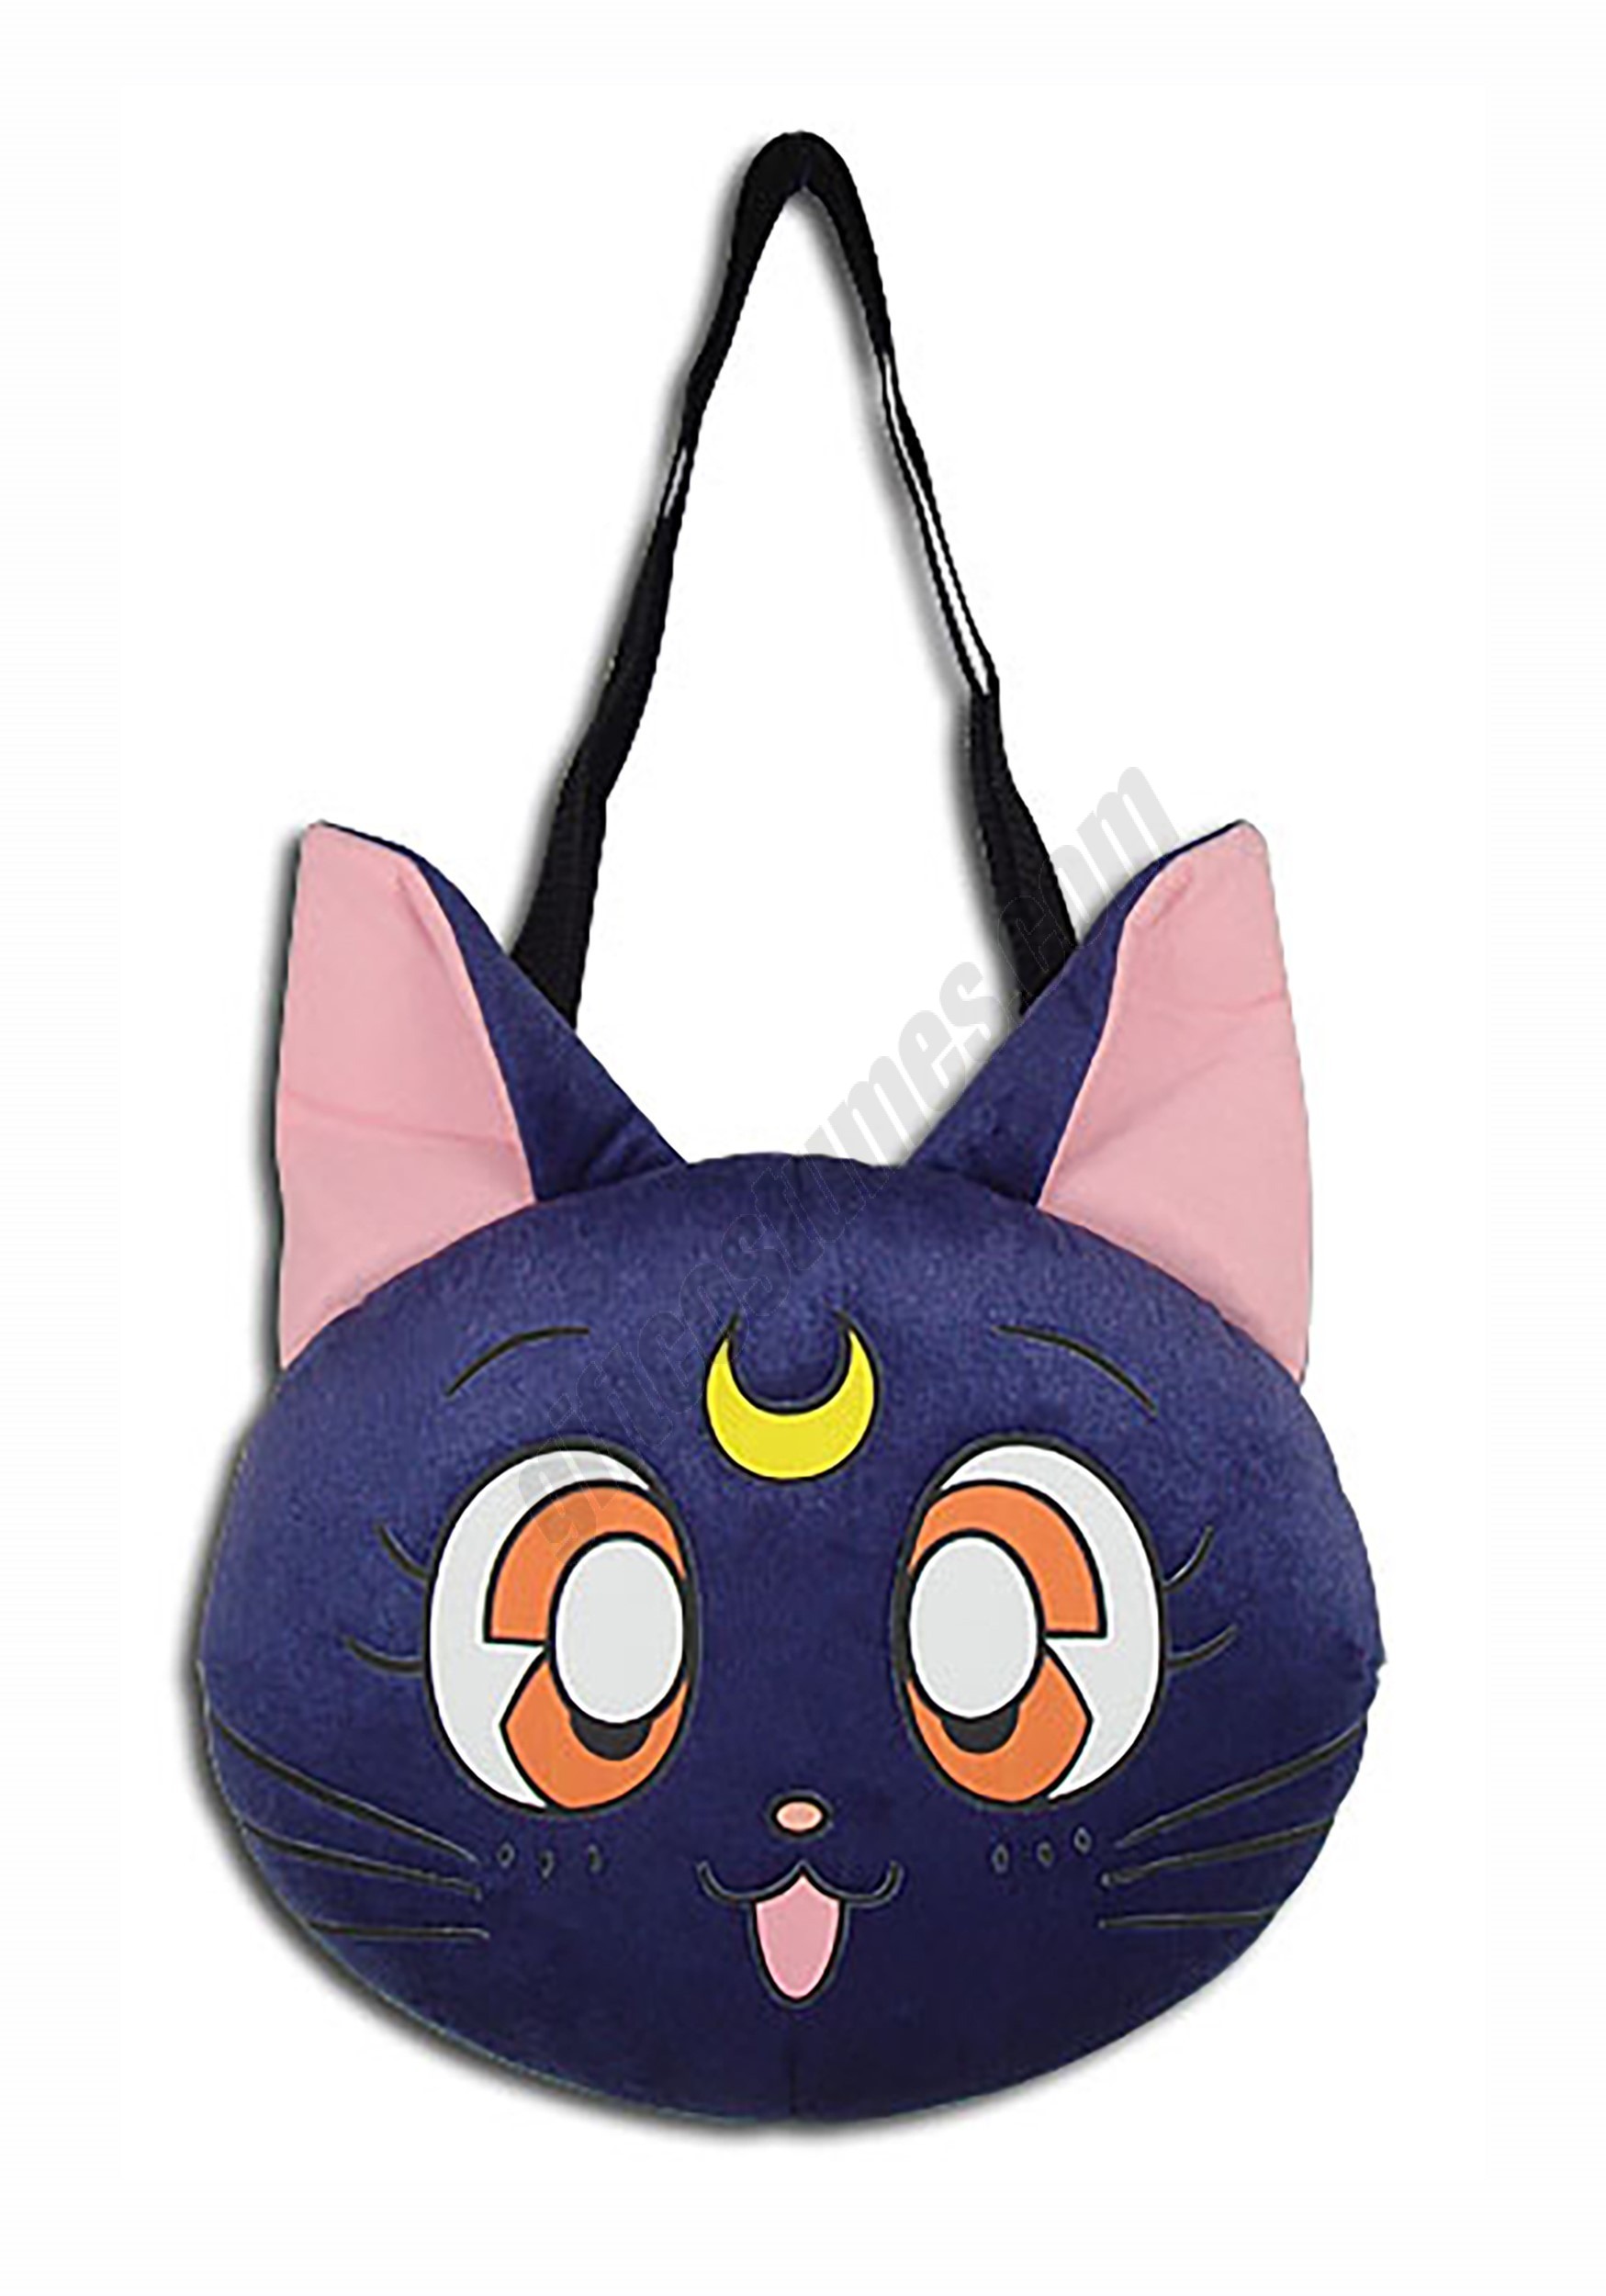 Sailor Moon - Luna Plush Cross Body Bag Promotions - Sailor Moon - Luna Plush Cross Body Bag Promotions